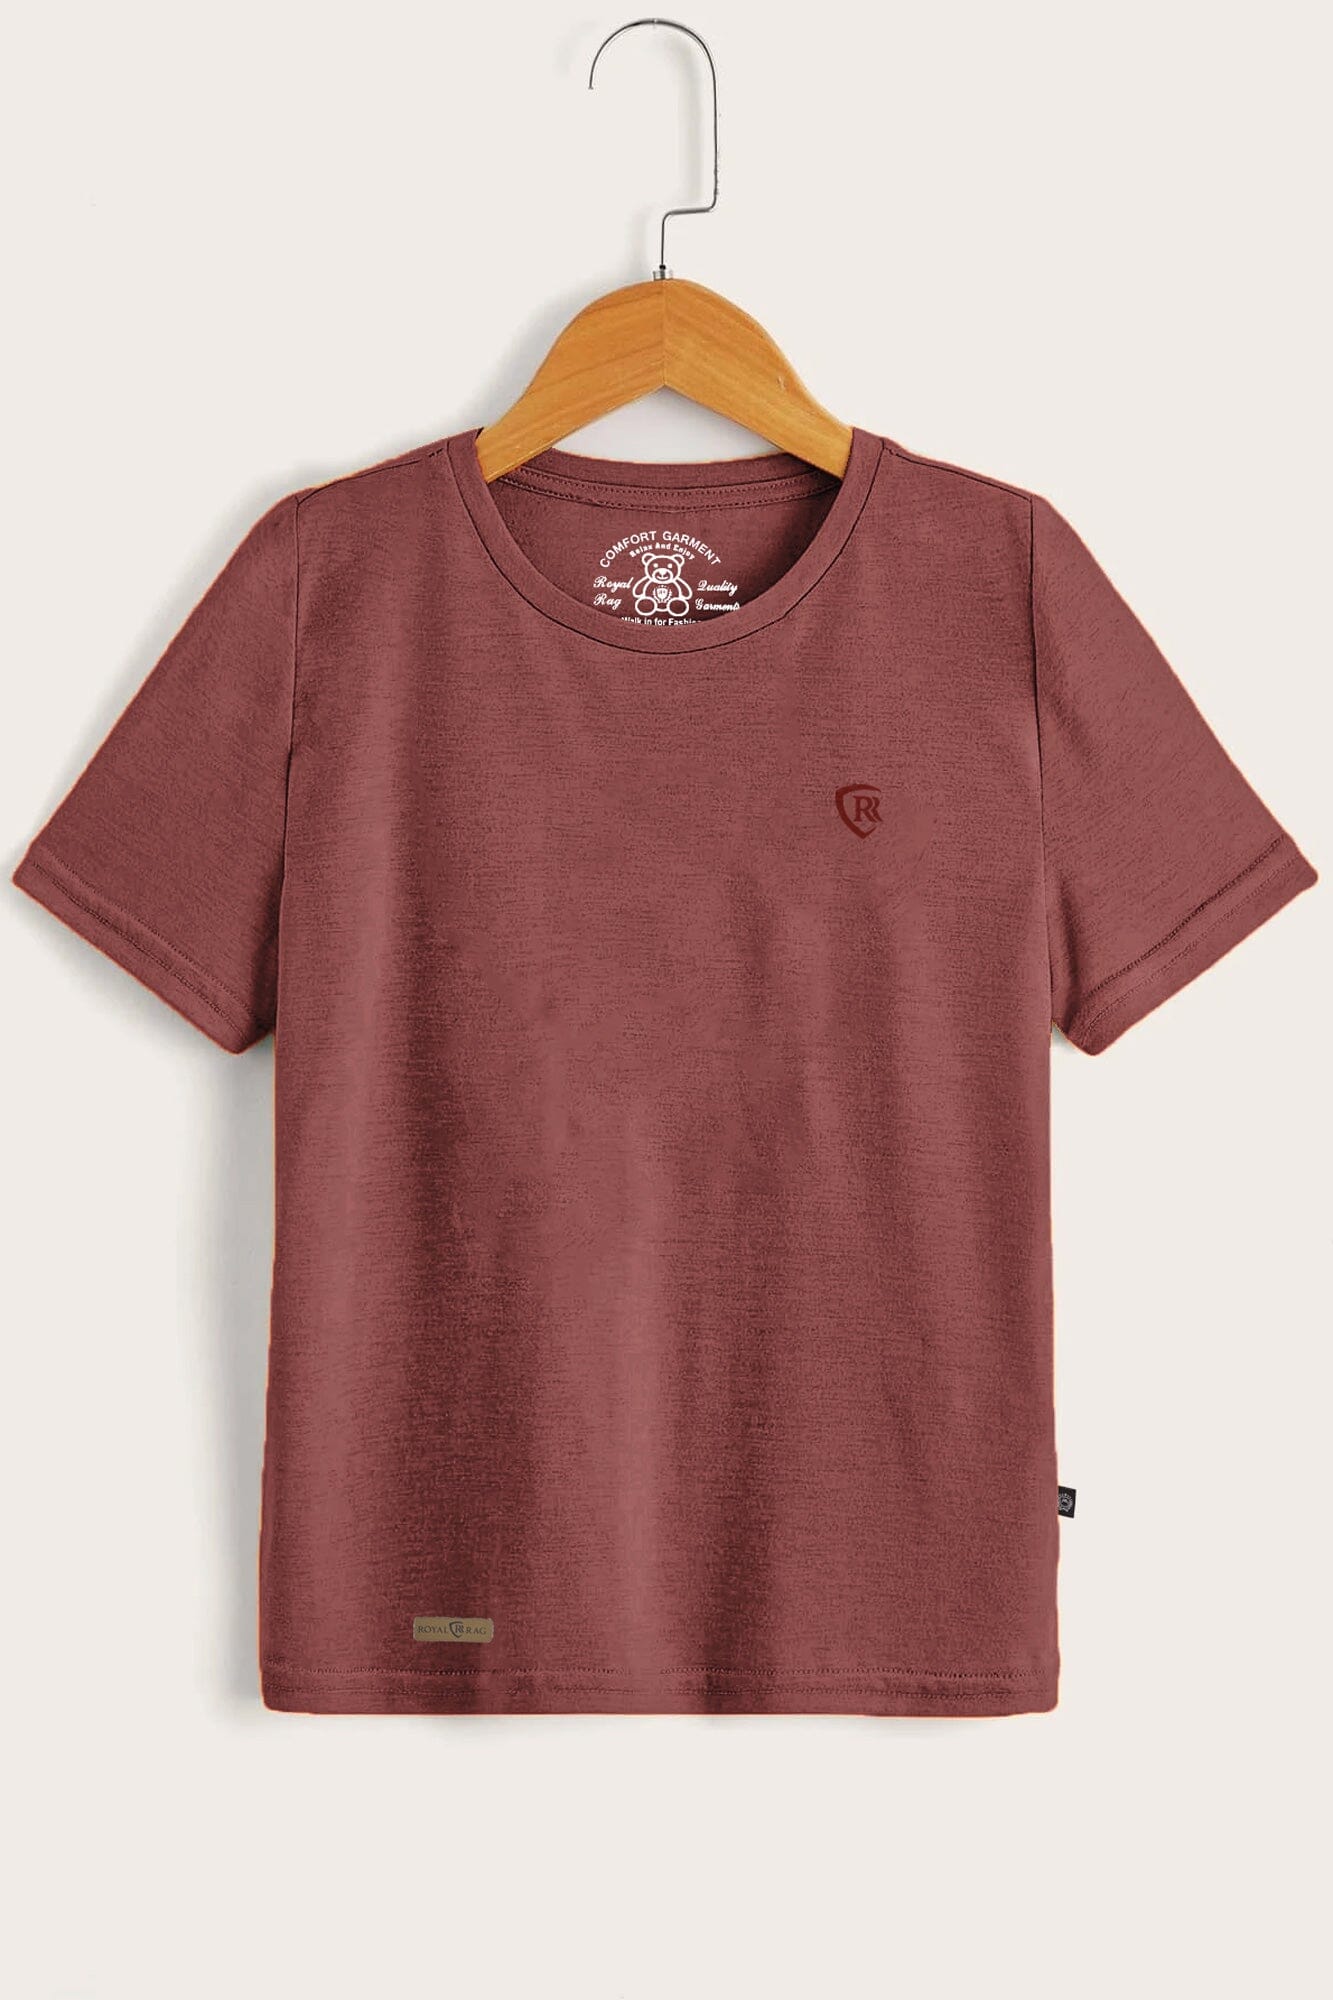 RR Kid's Logo Printed Short Sleeve Tee Shirt Boy's Tee Shirt Usman Traders Burgundy 2-3 Years 